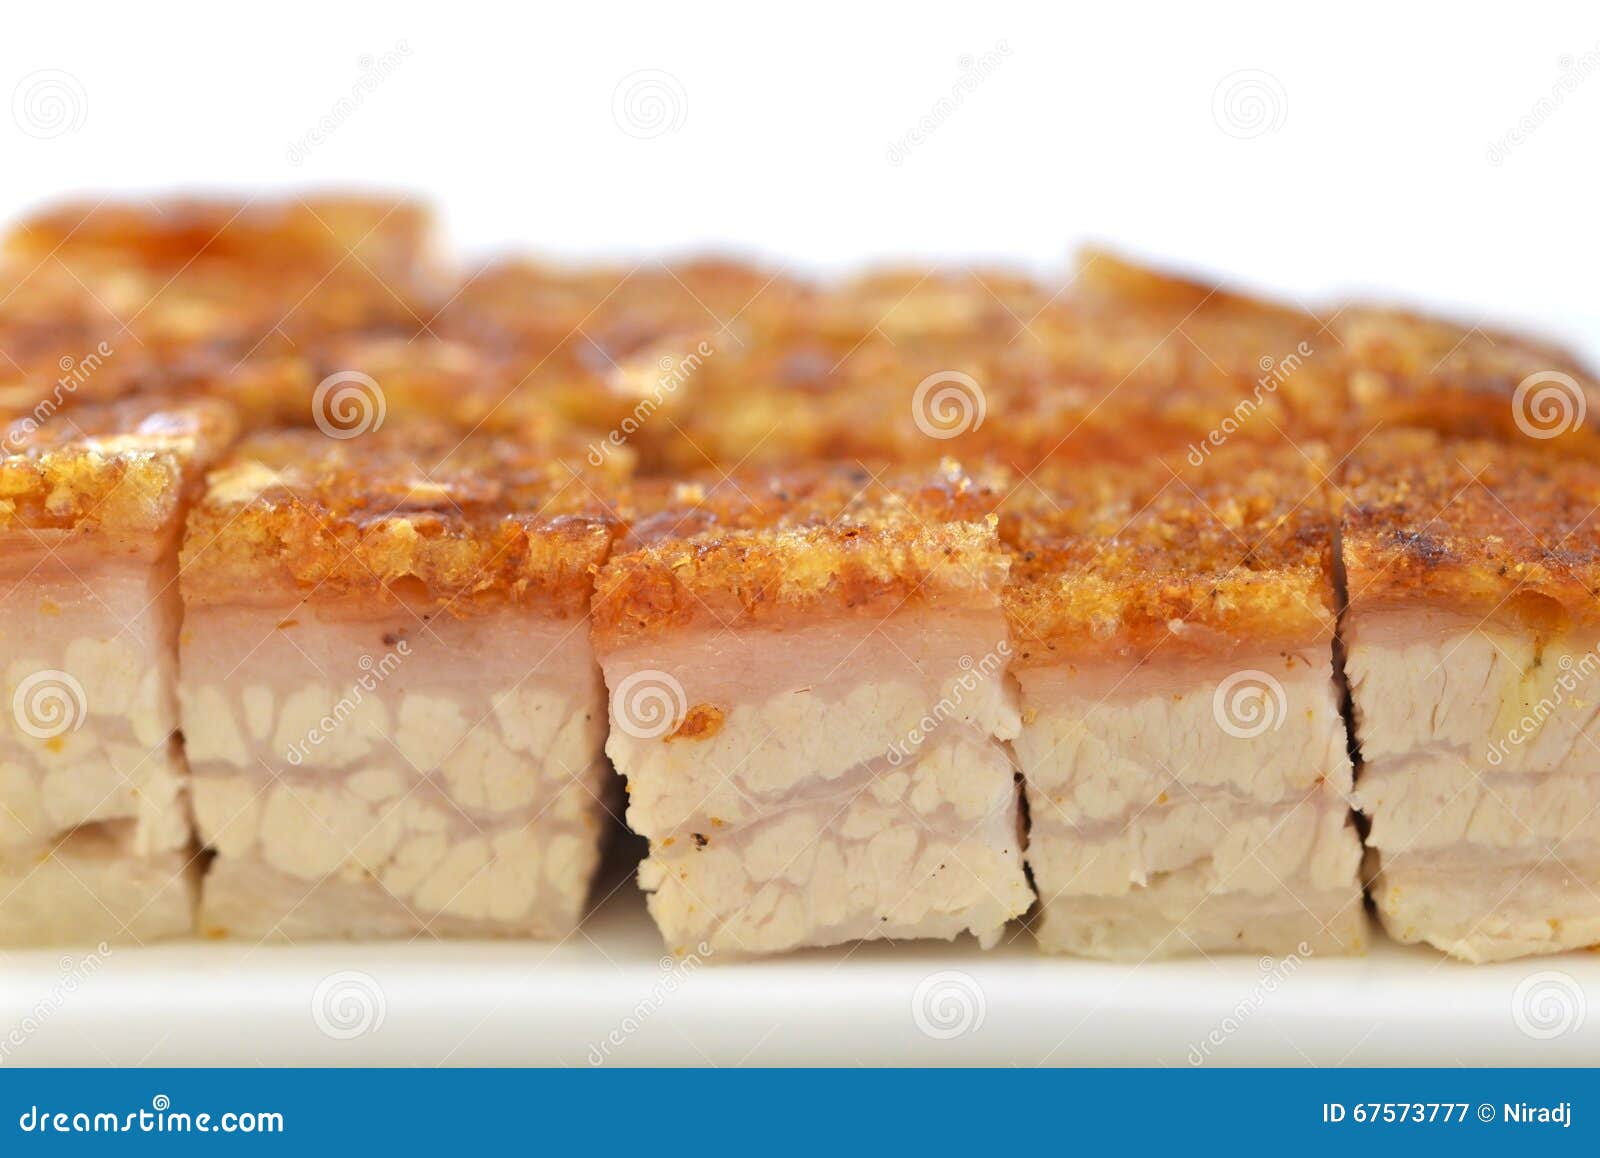 crispy roasted pork belly